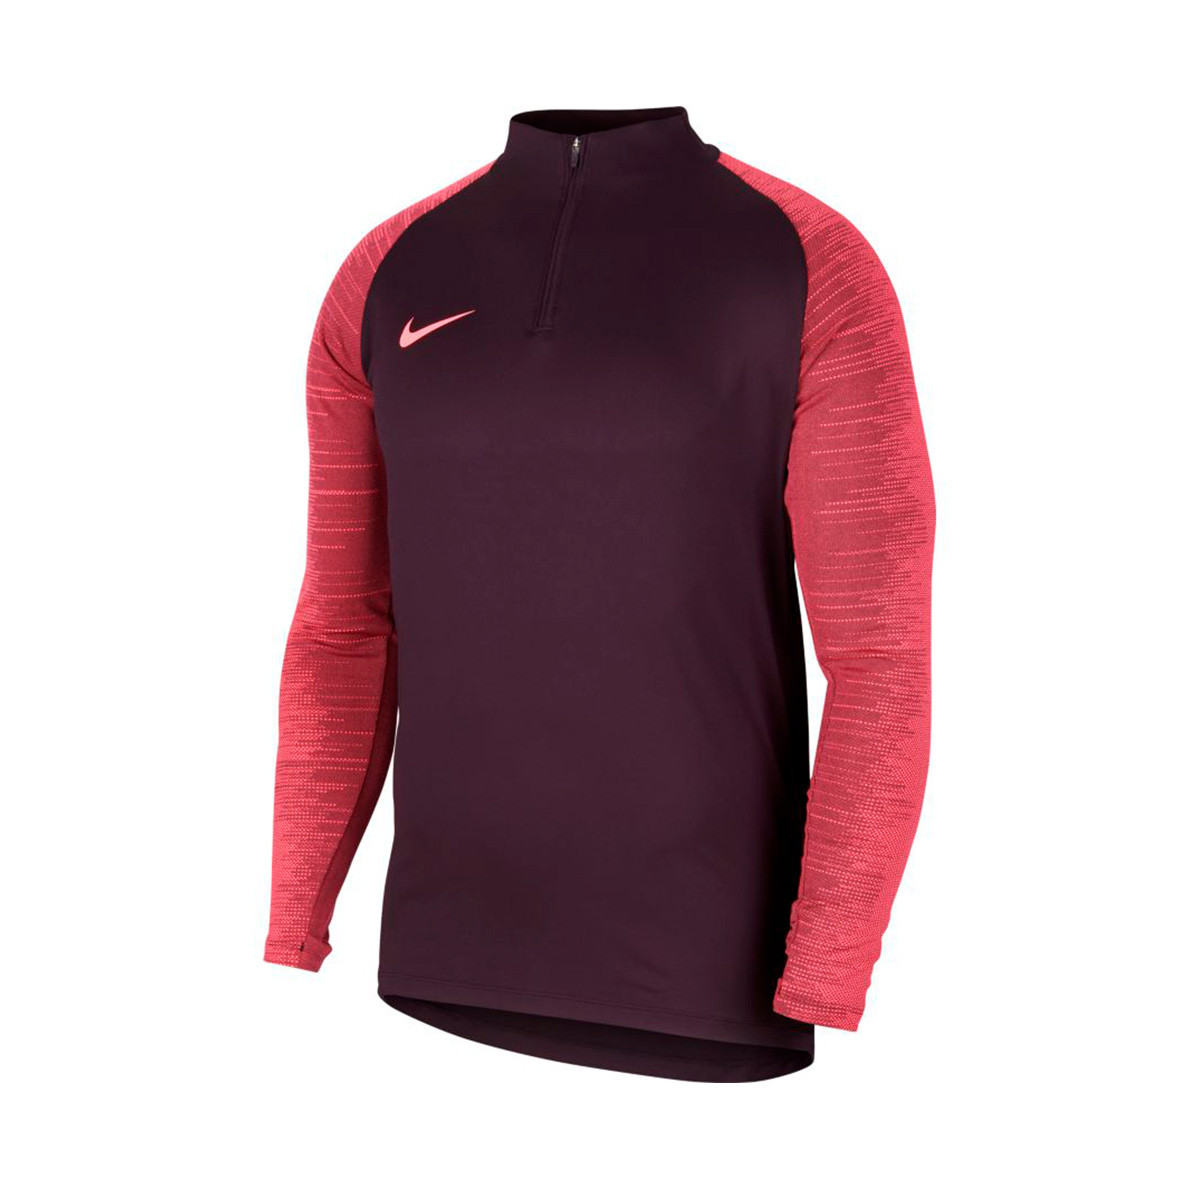 Sweatshirt Nike Dri-FIT Strike Burgundy 